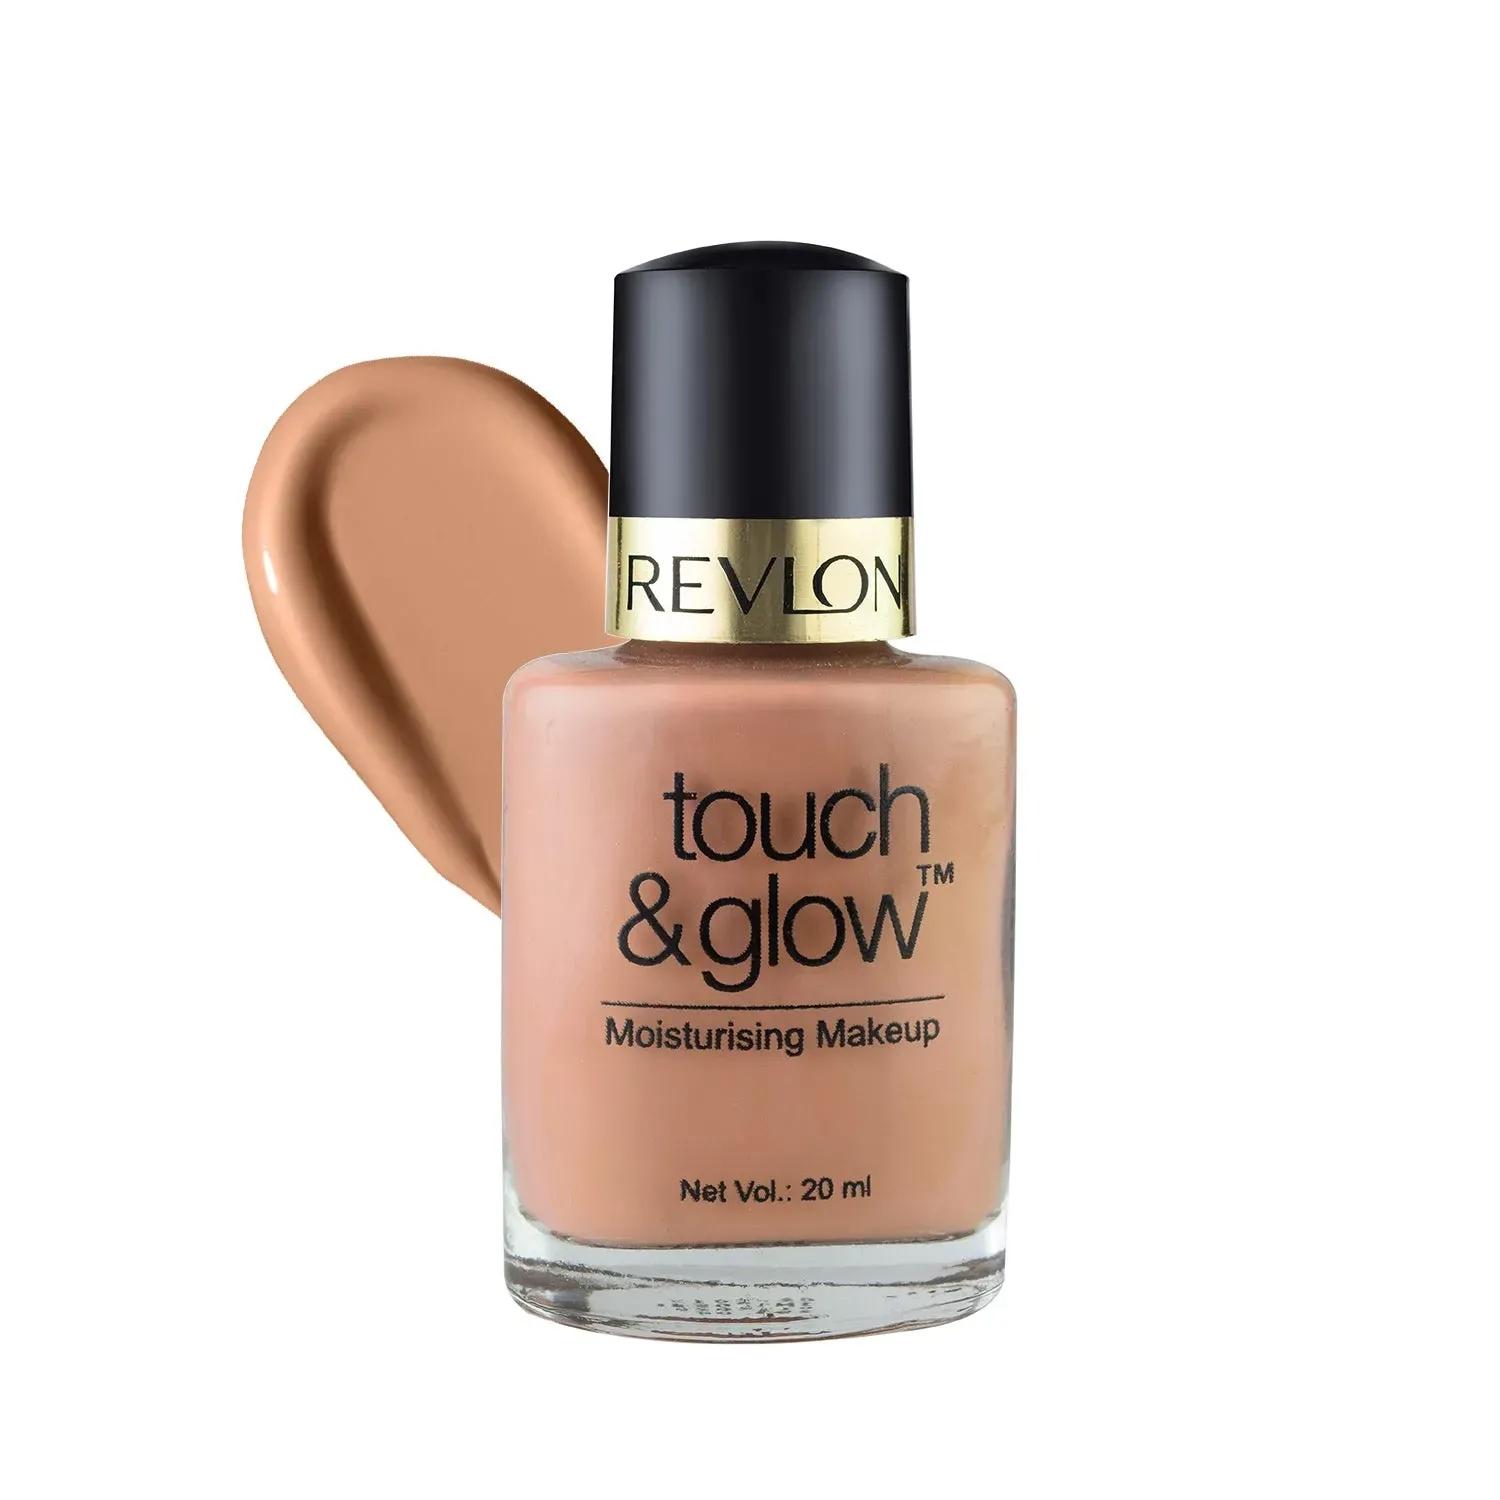 revlon touch & glow makeup foundation - warm mist (20ml)